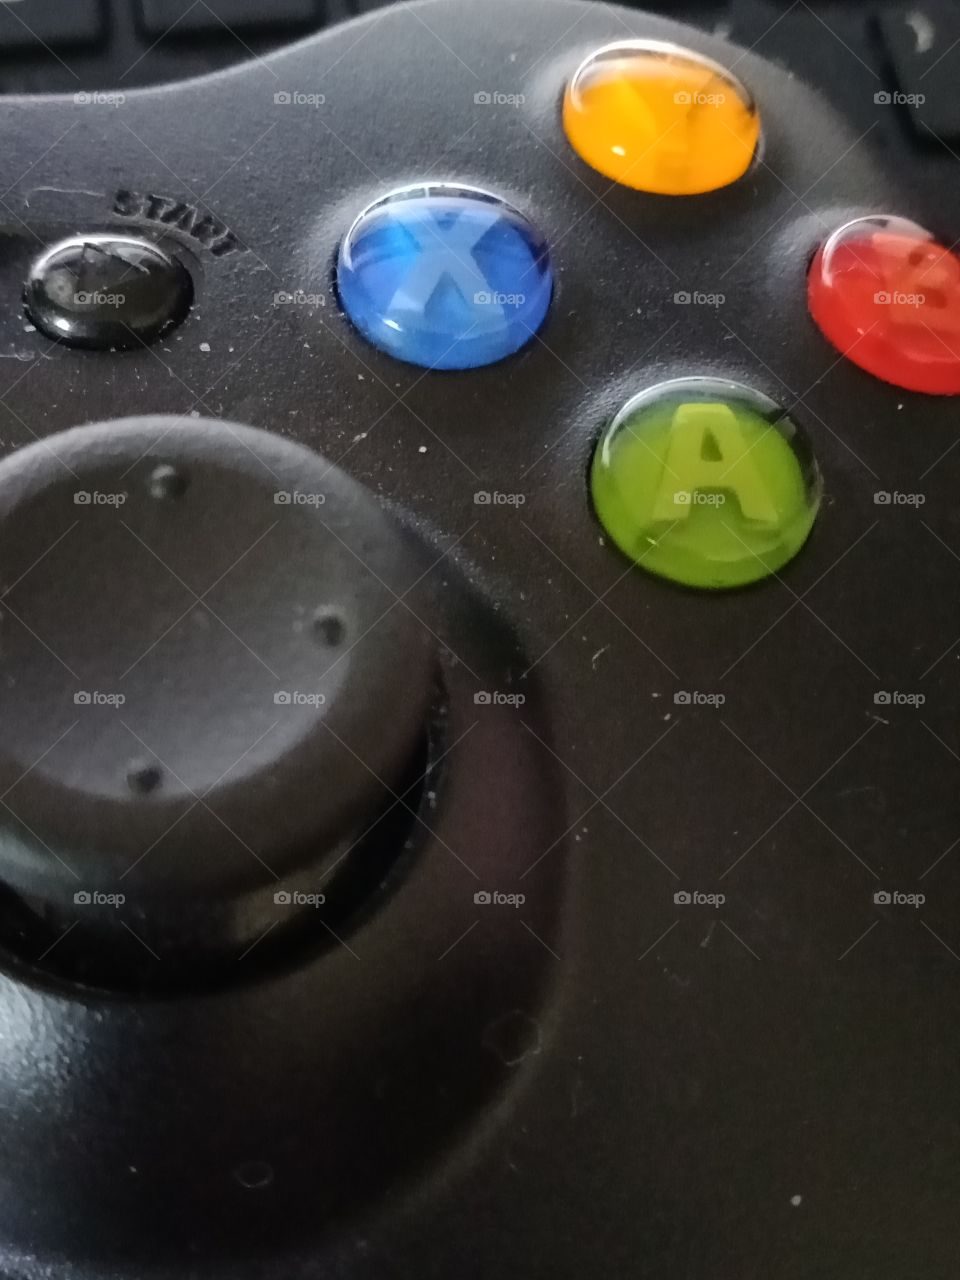 a closeup of a gaming controller